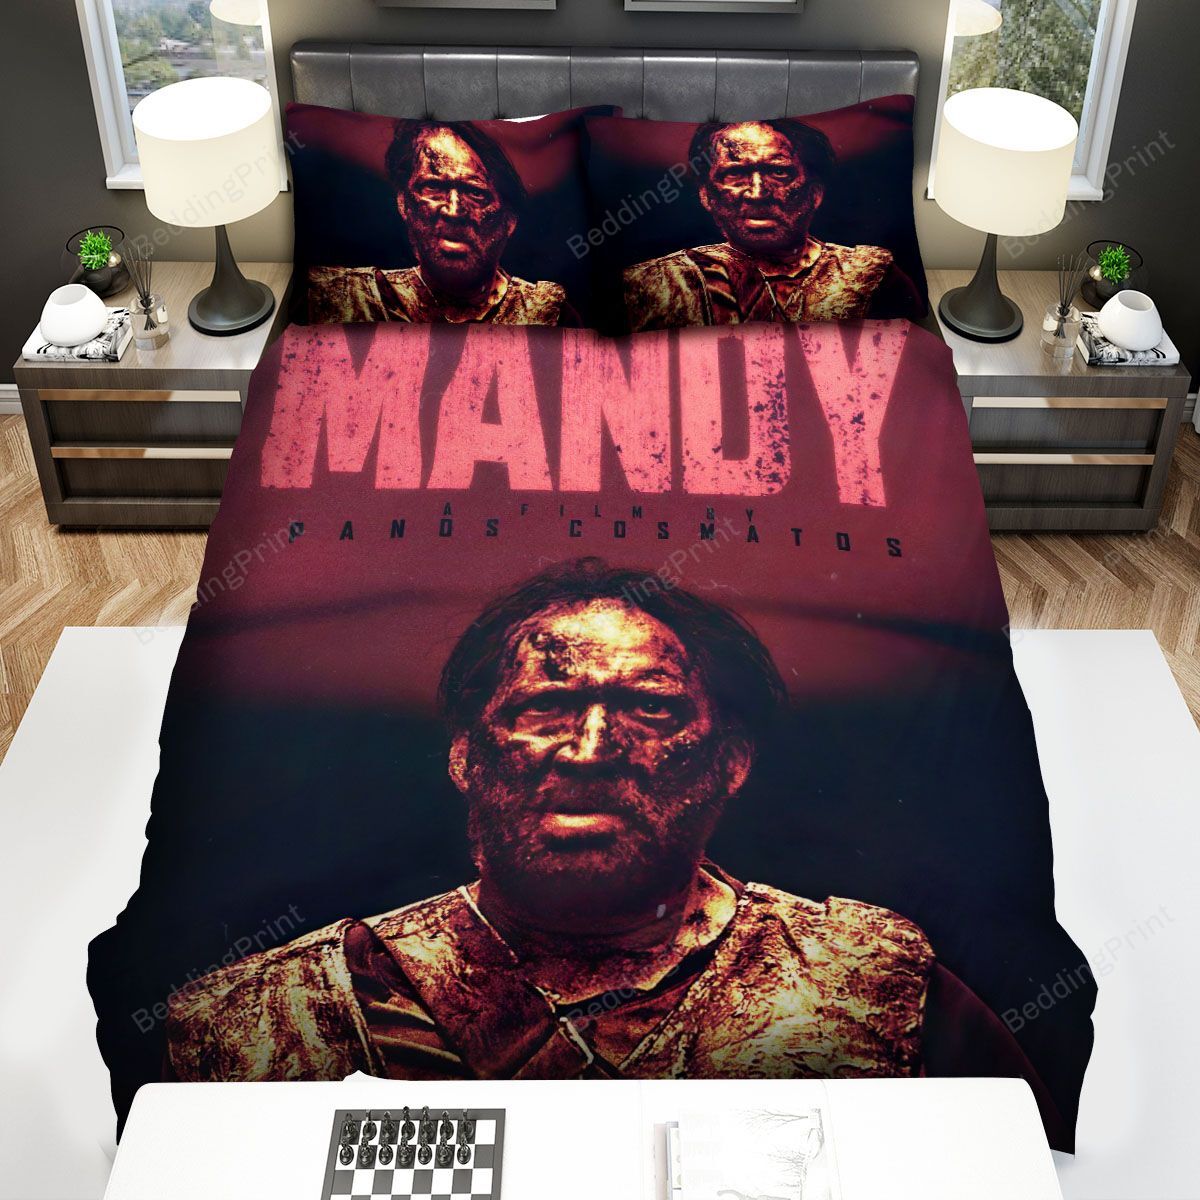 Mandy (I) Red Movie Poster Bed Sheets Spread Comforter Duvet Cover Bedding Sets